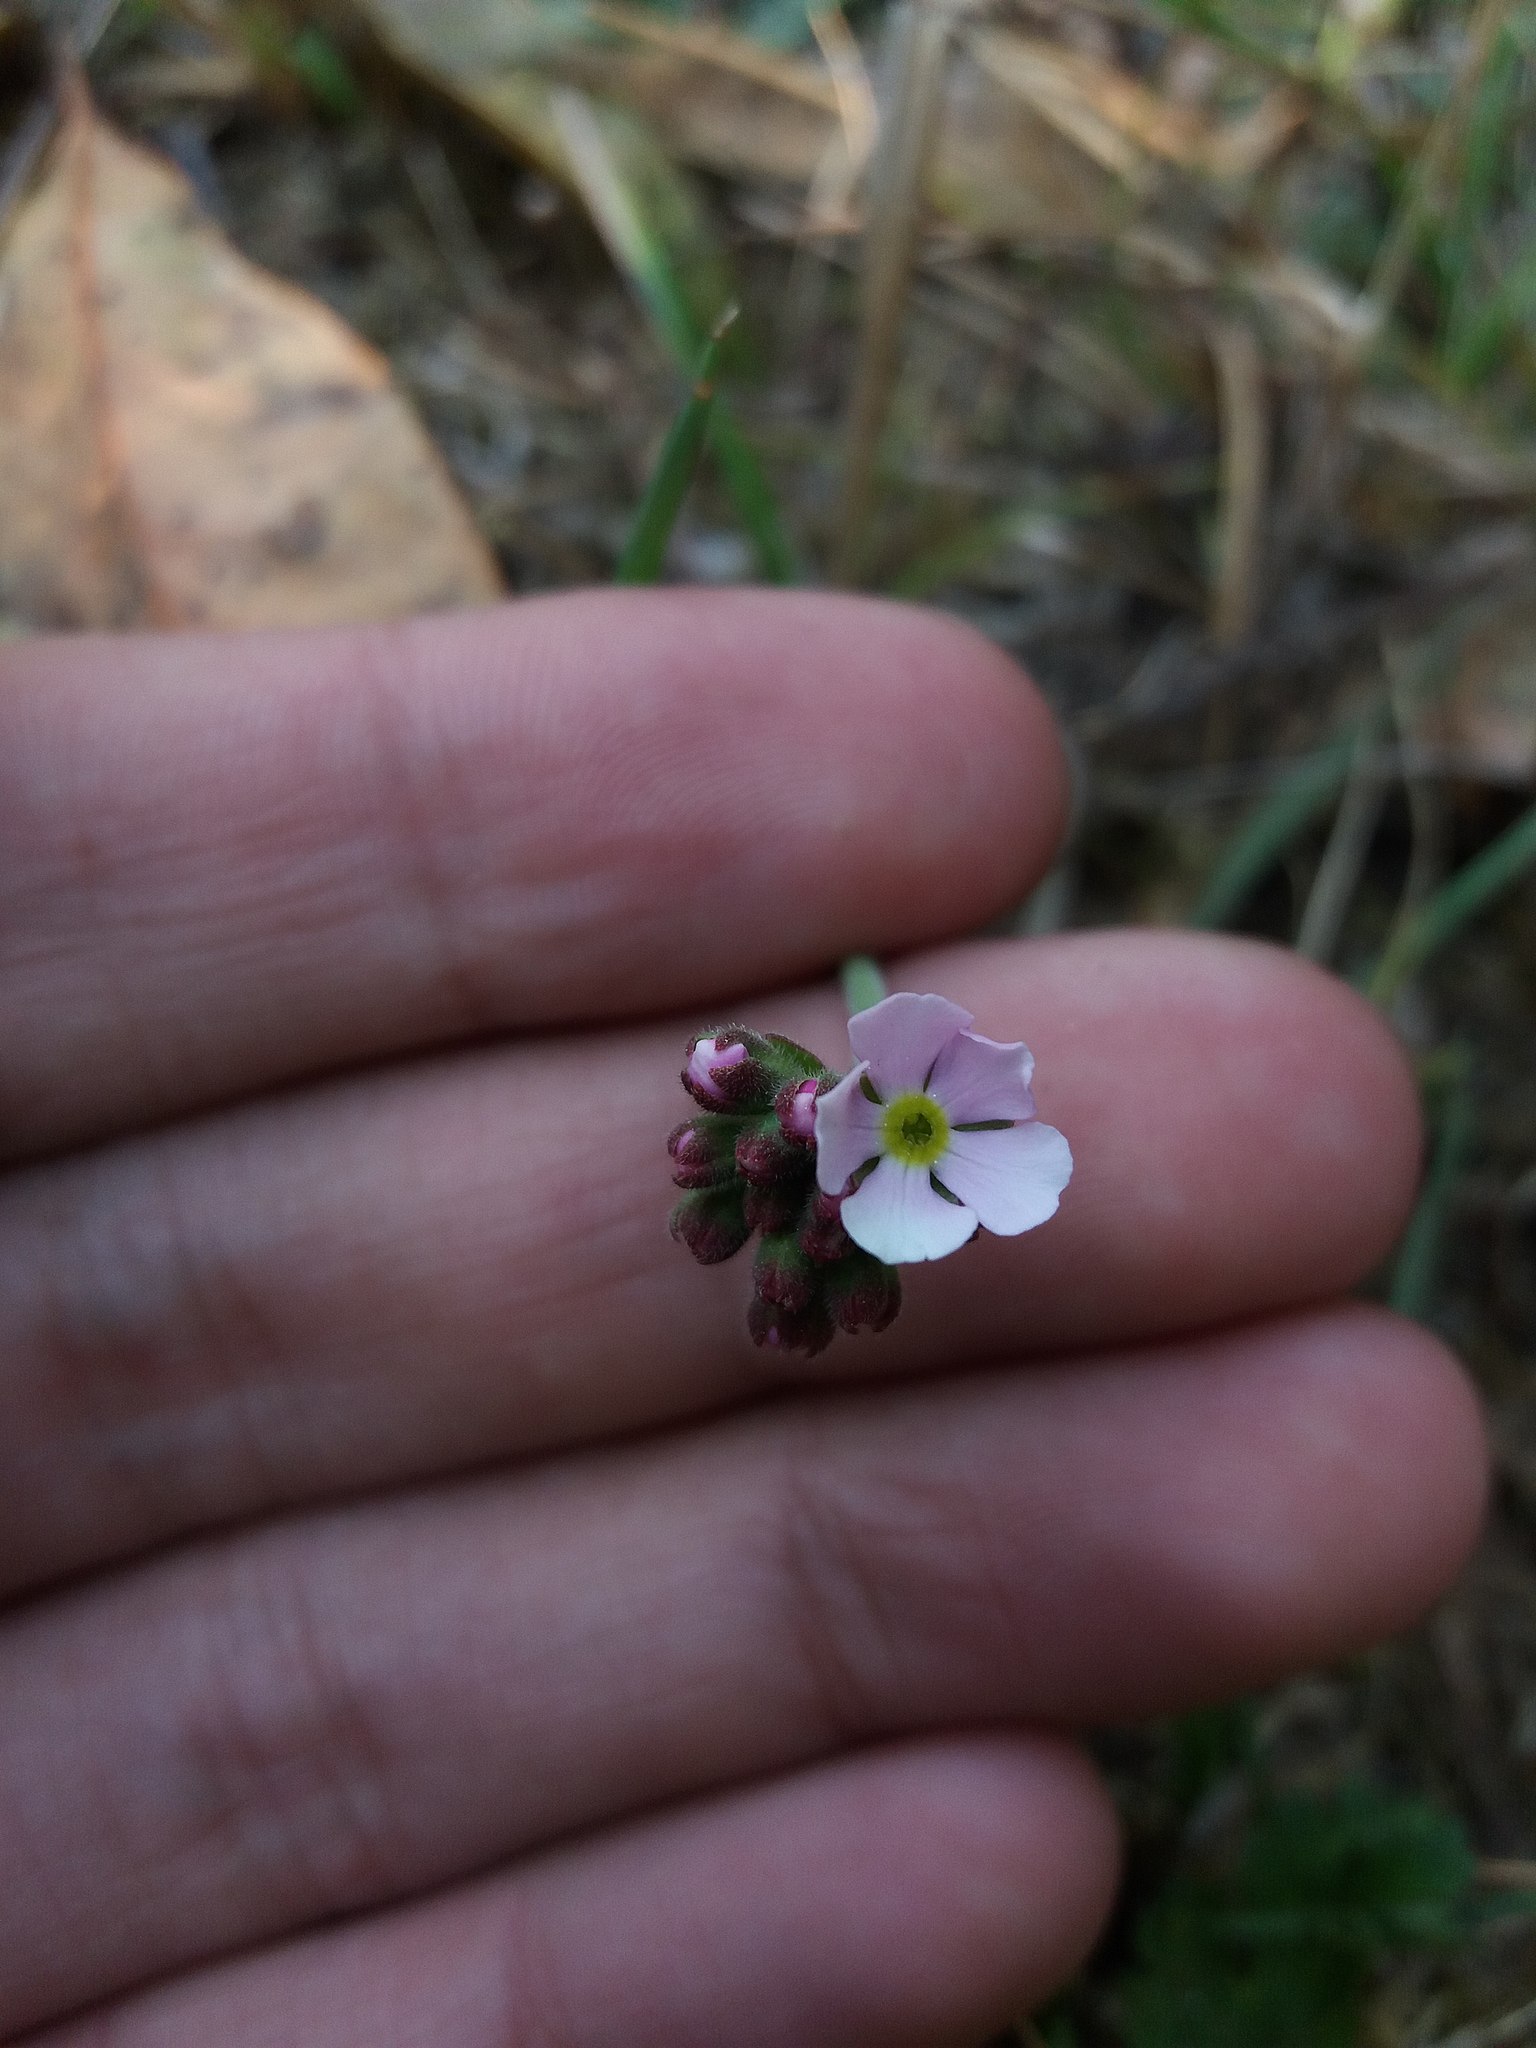 File:Small flowers (5371688781).jpg - Wikimedia Commons